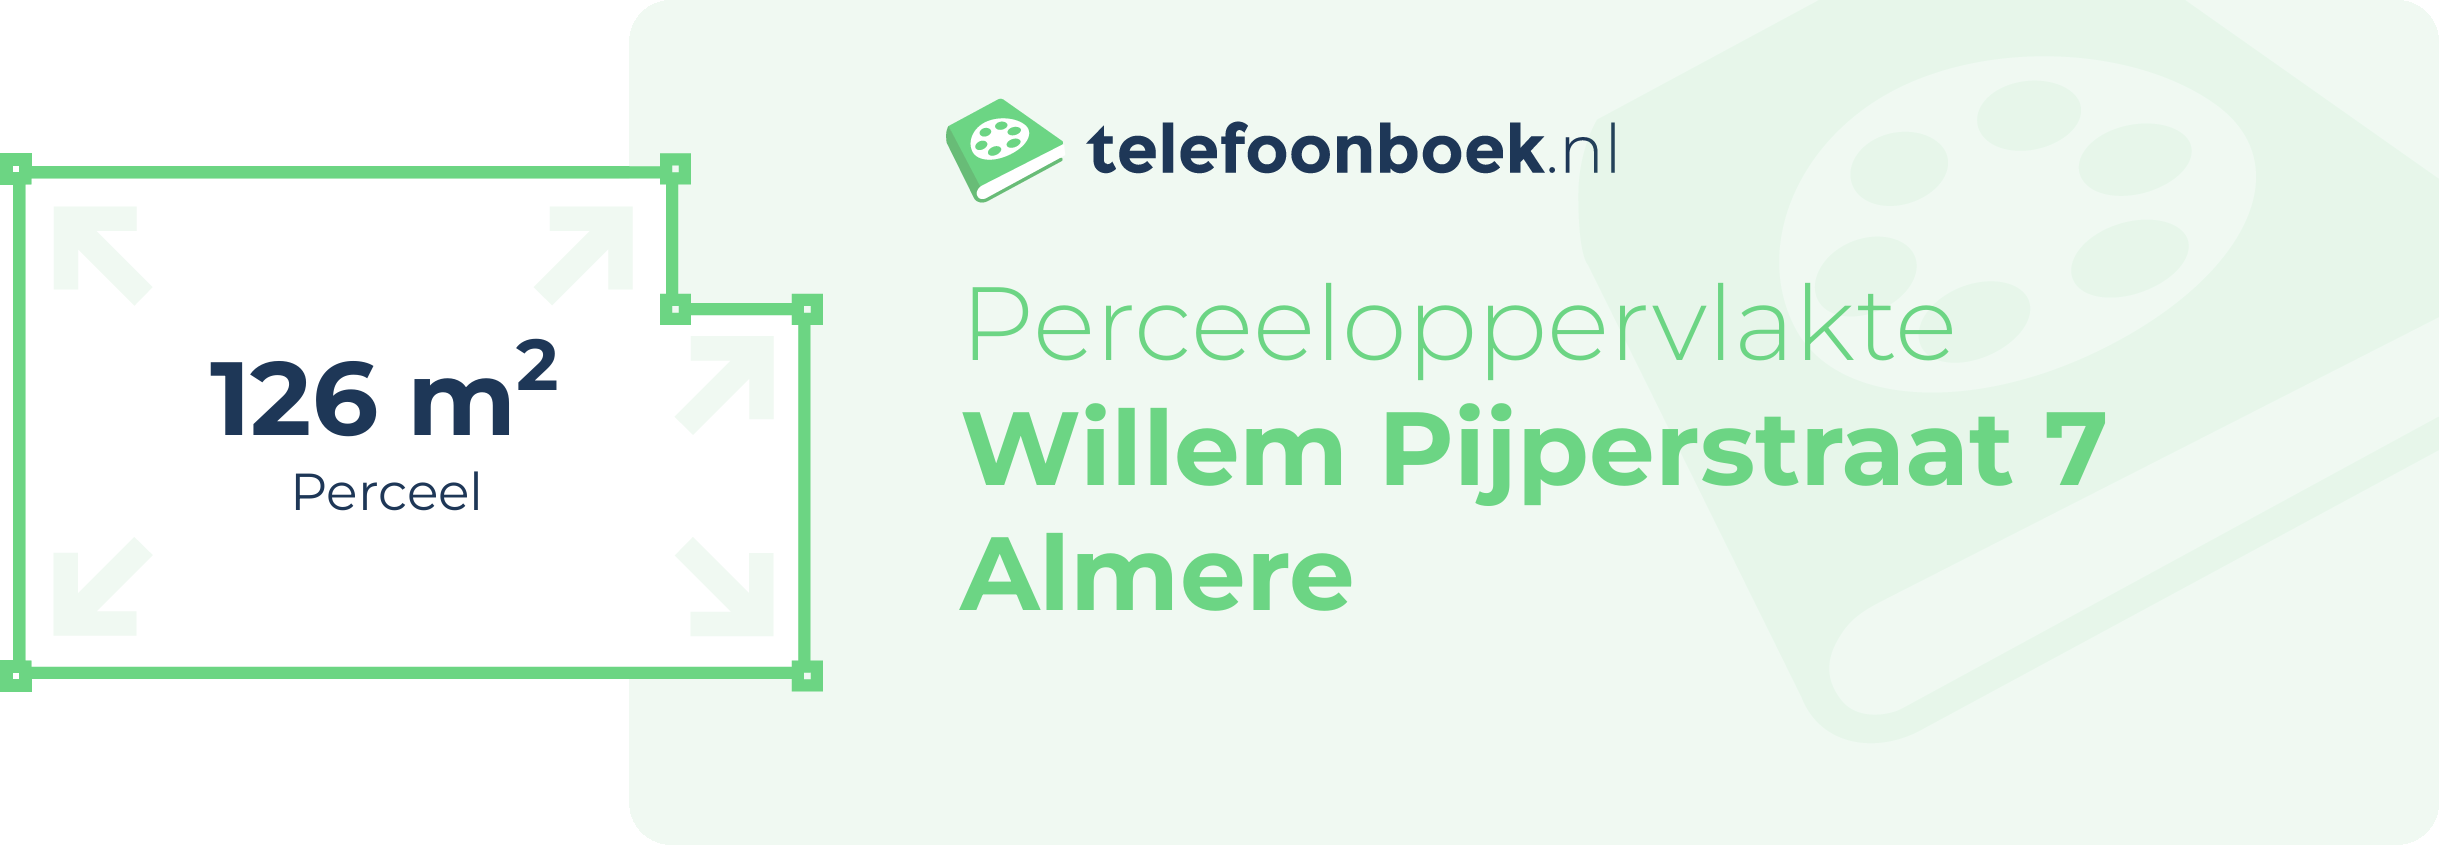 Perceeloppervlakte Willem Pijperstraat 7 Almere